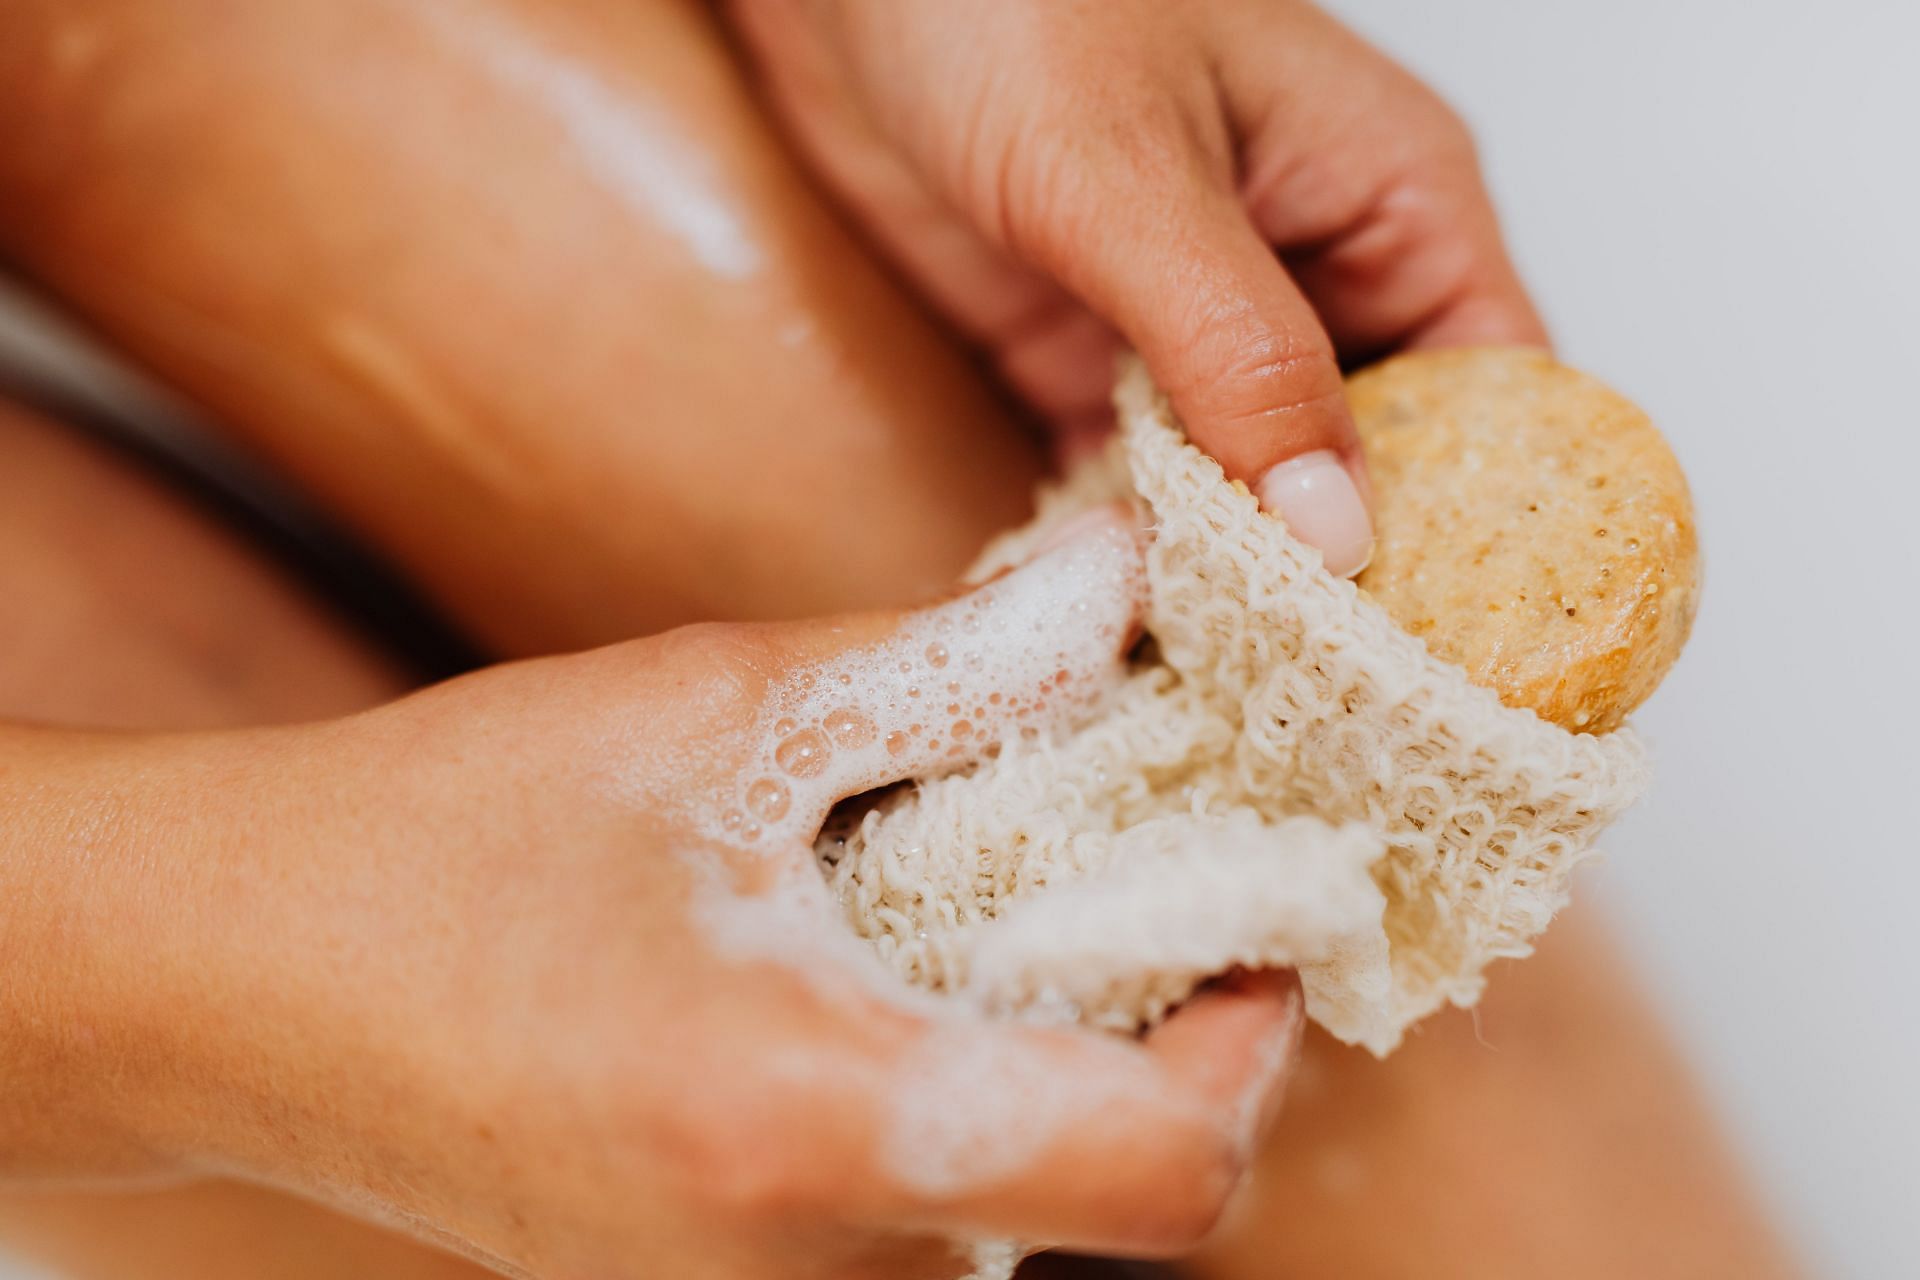 Oatmeal bath for smooth skin (Image via Pexels/ Karolina)